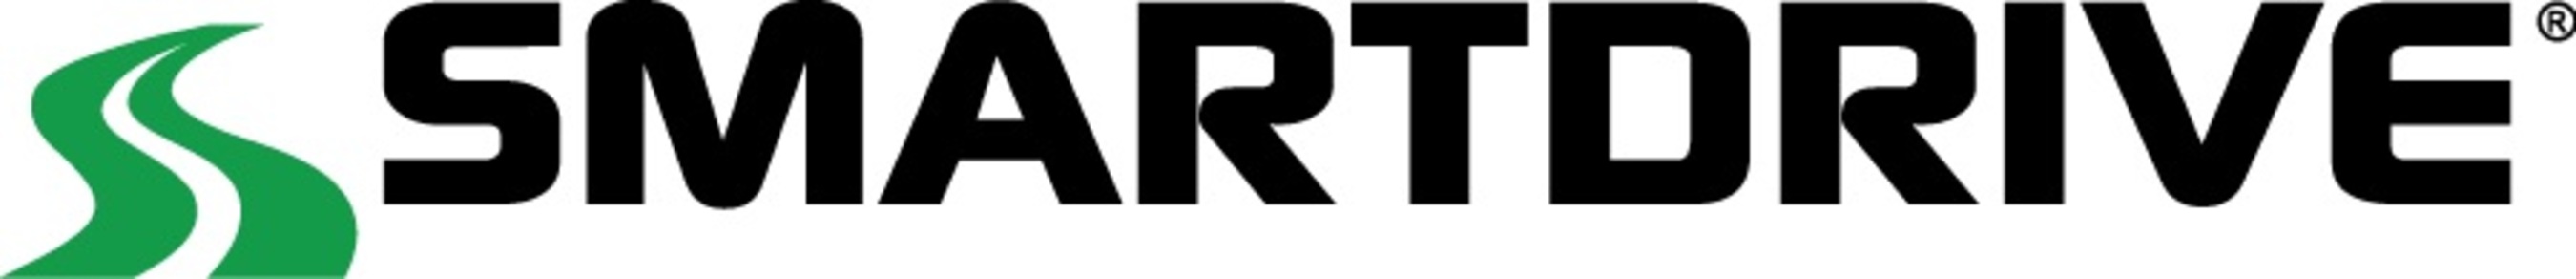 SmartDrive logo